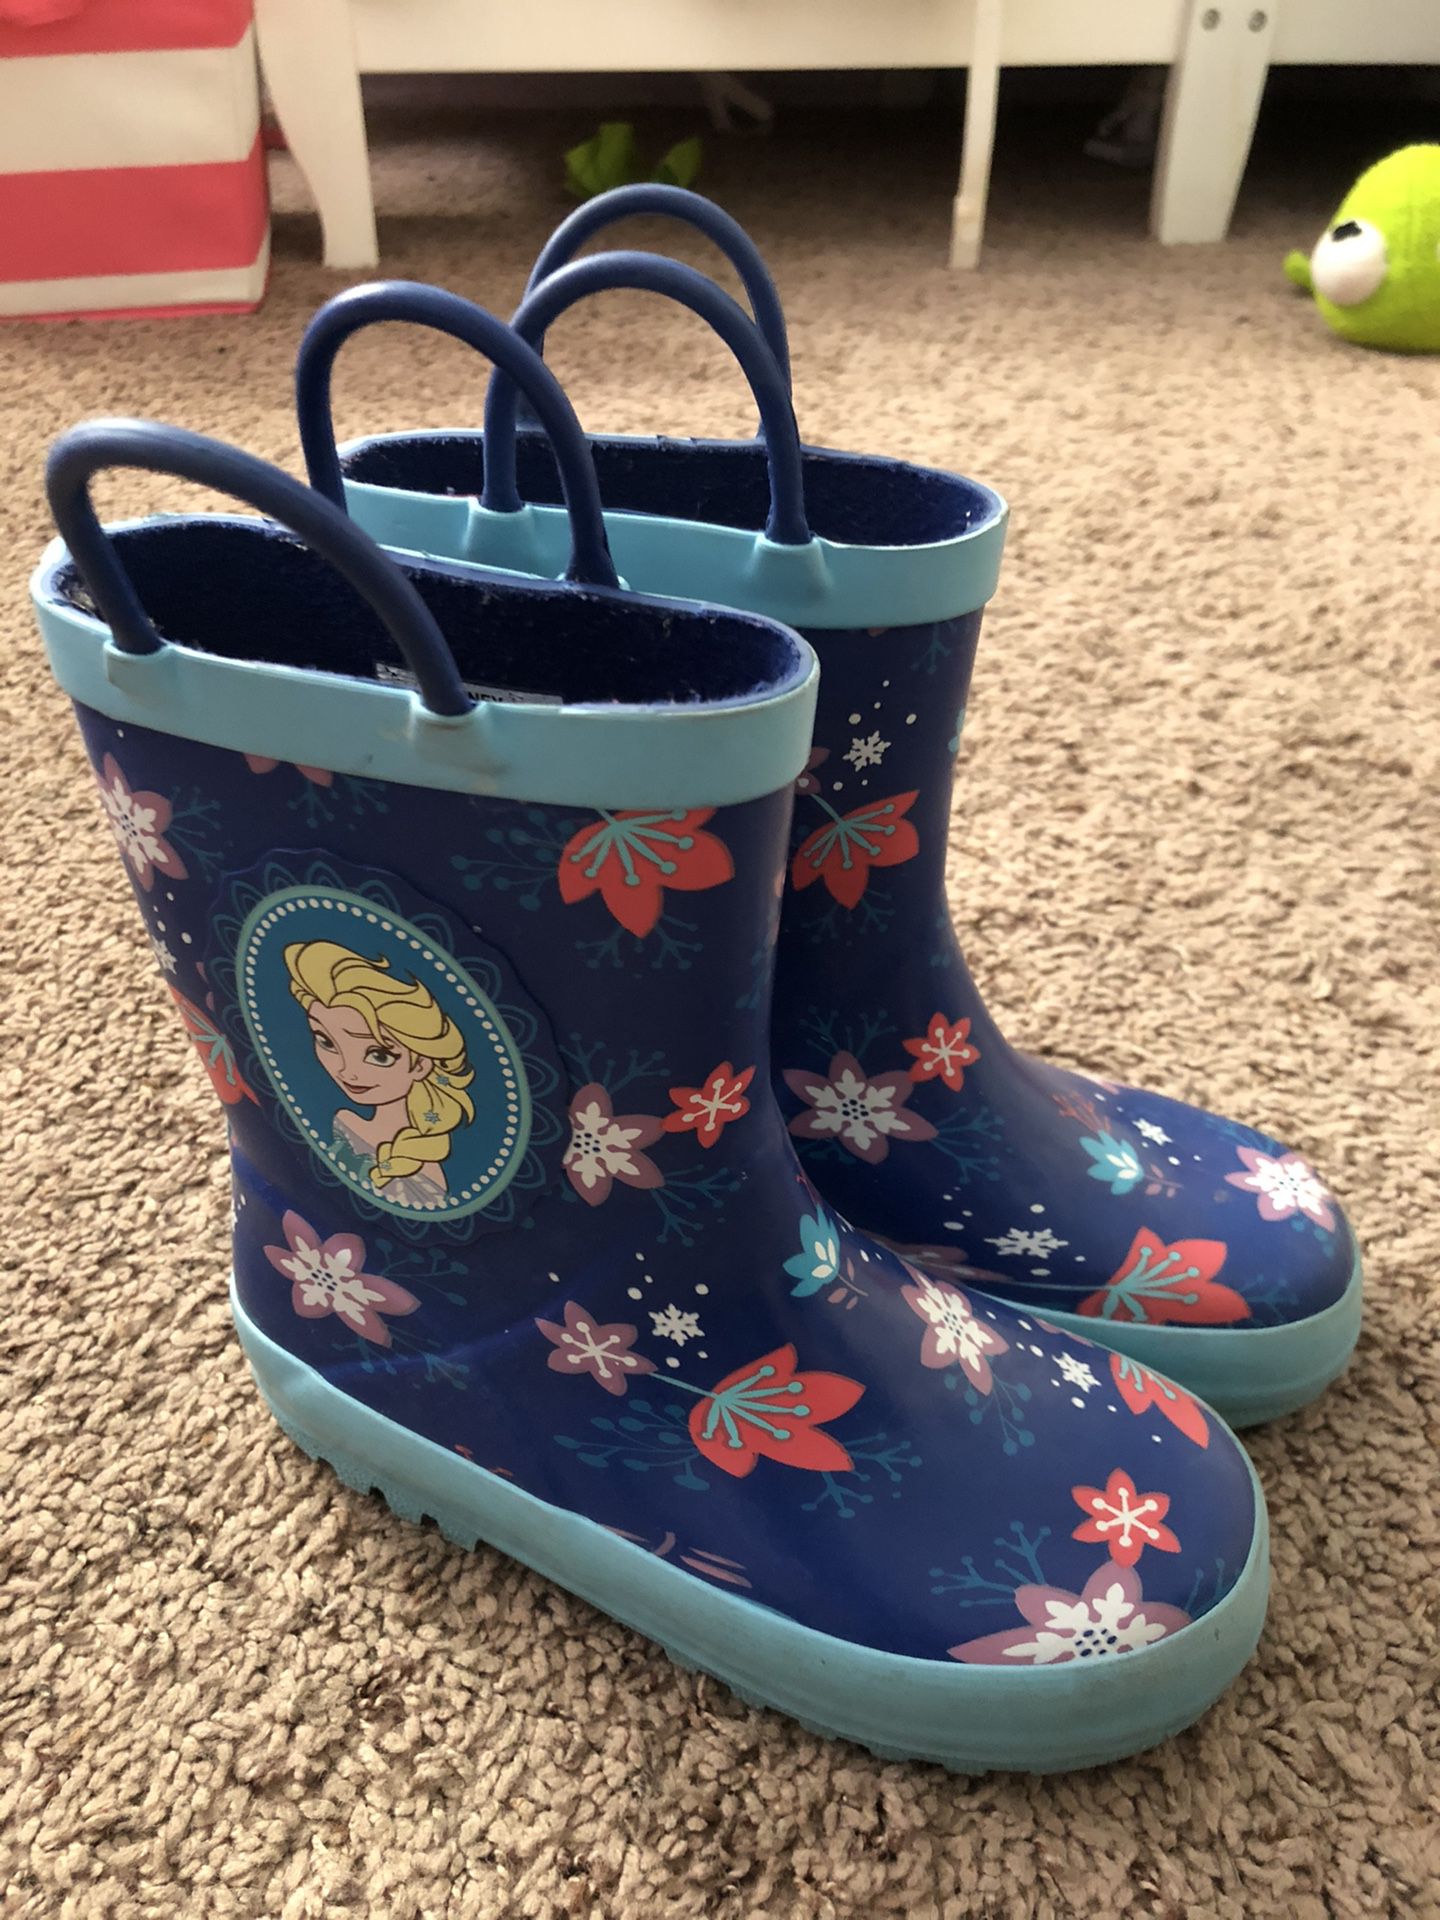 Frozen rain boots